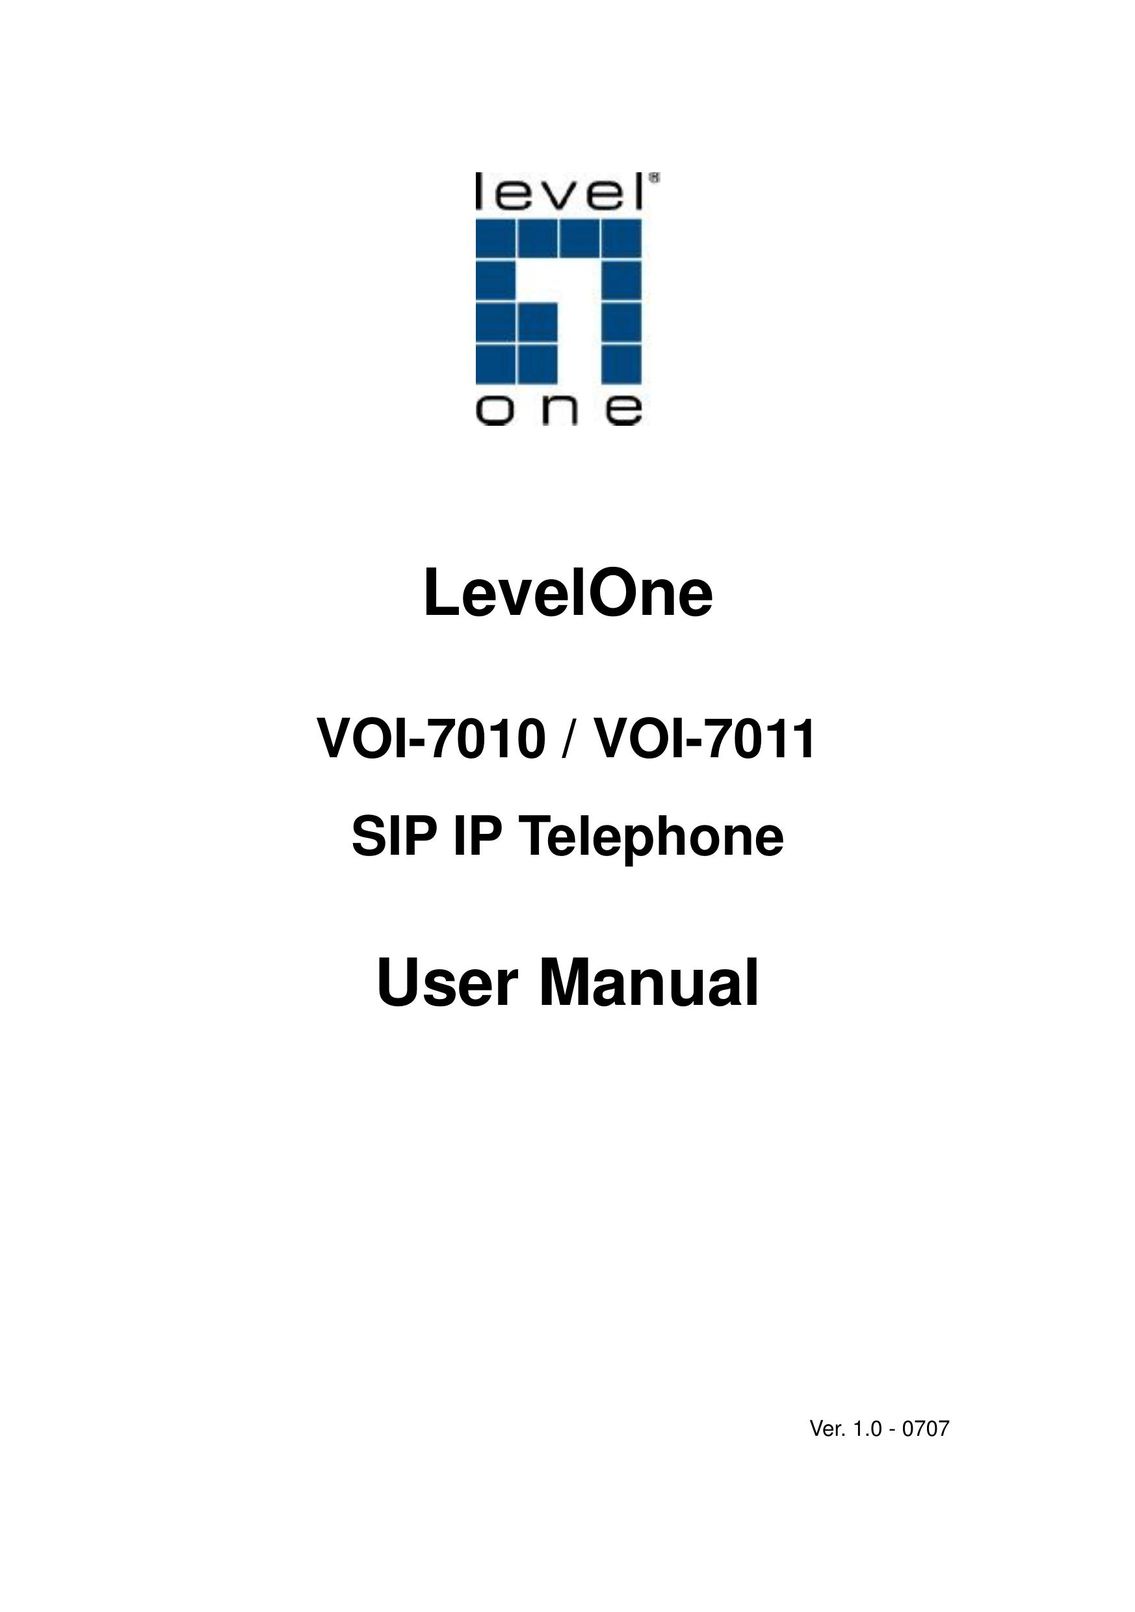 LevelOne VOI-7010 IP Phone User Manual